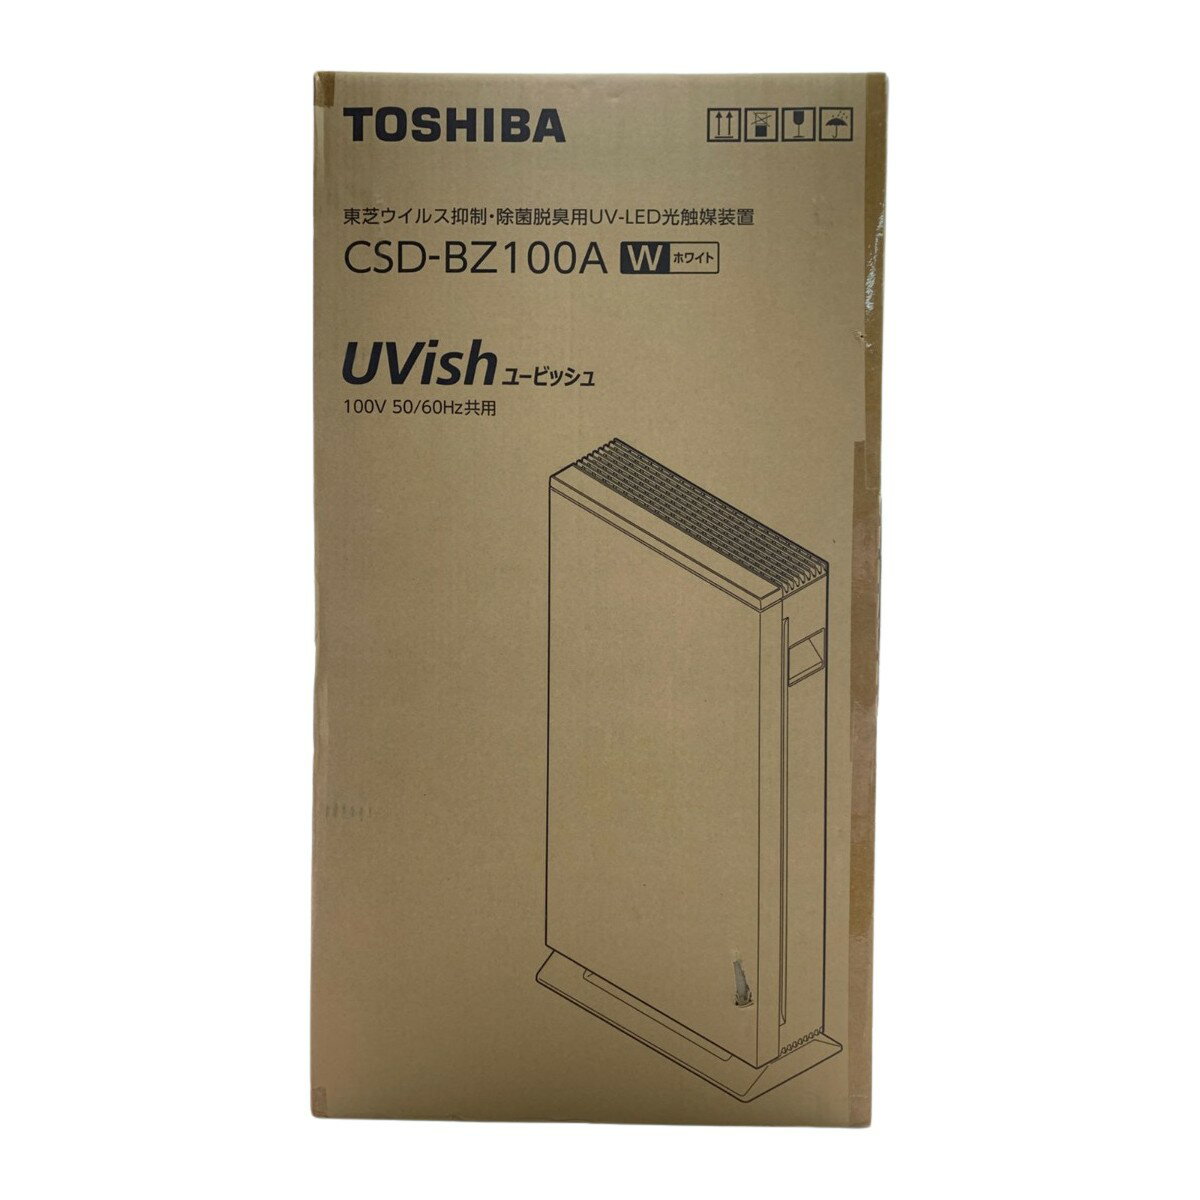 šTOSHIBA  UVish 륹æUV-LED CSD-BZ100A S